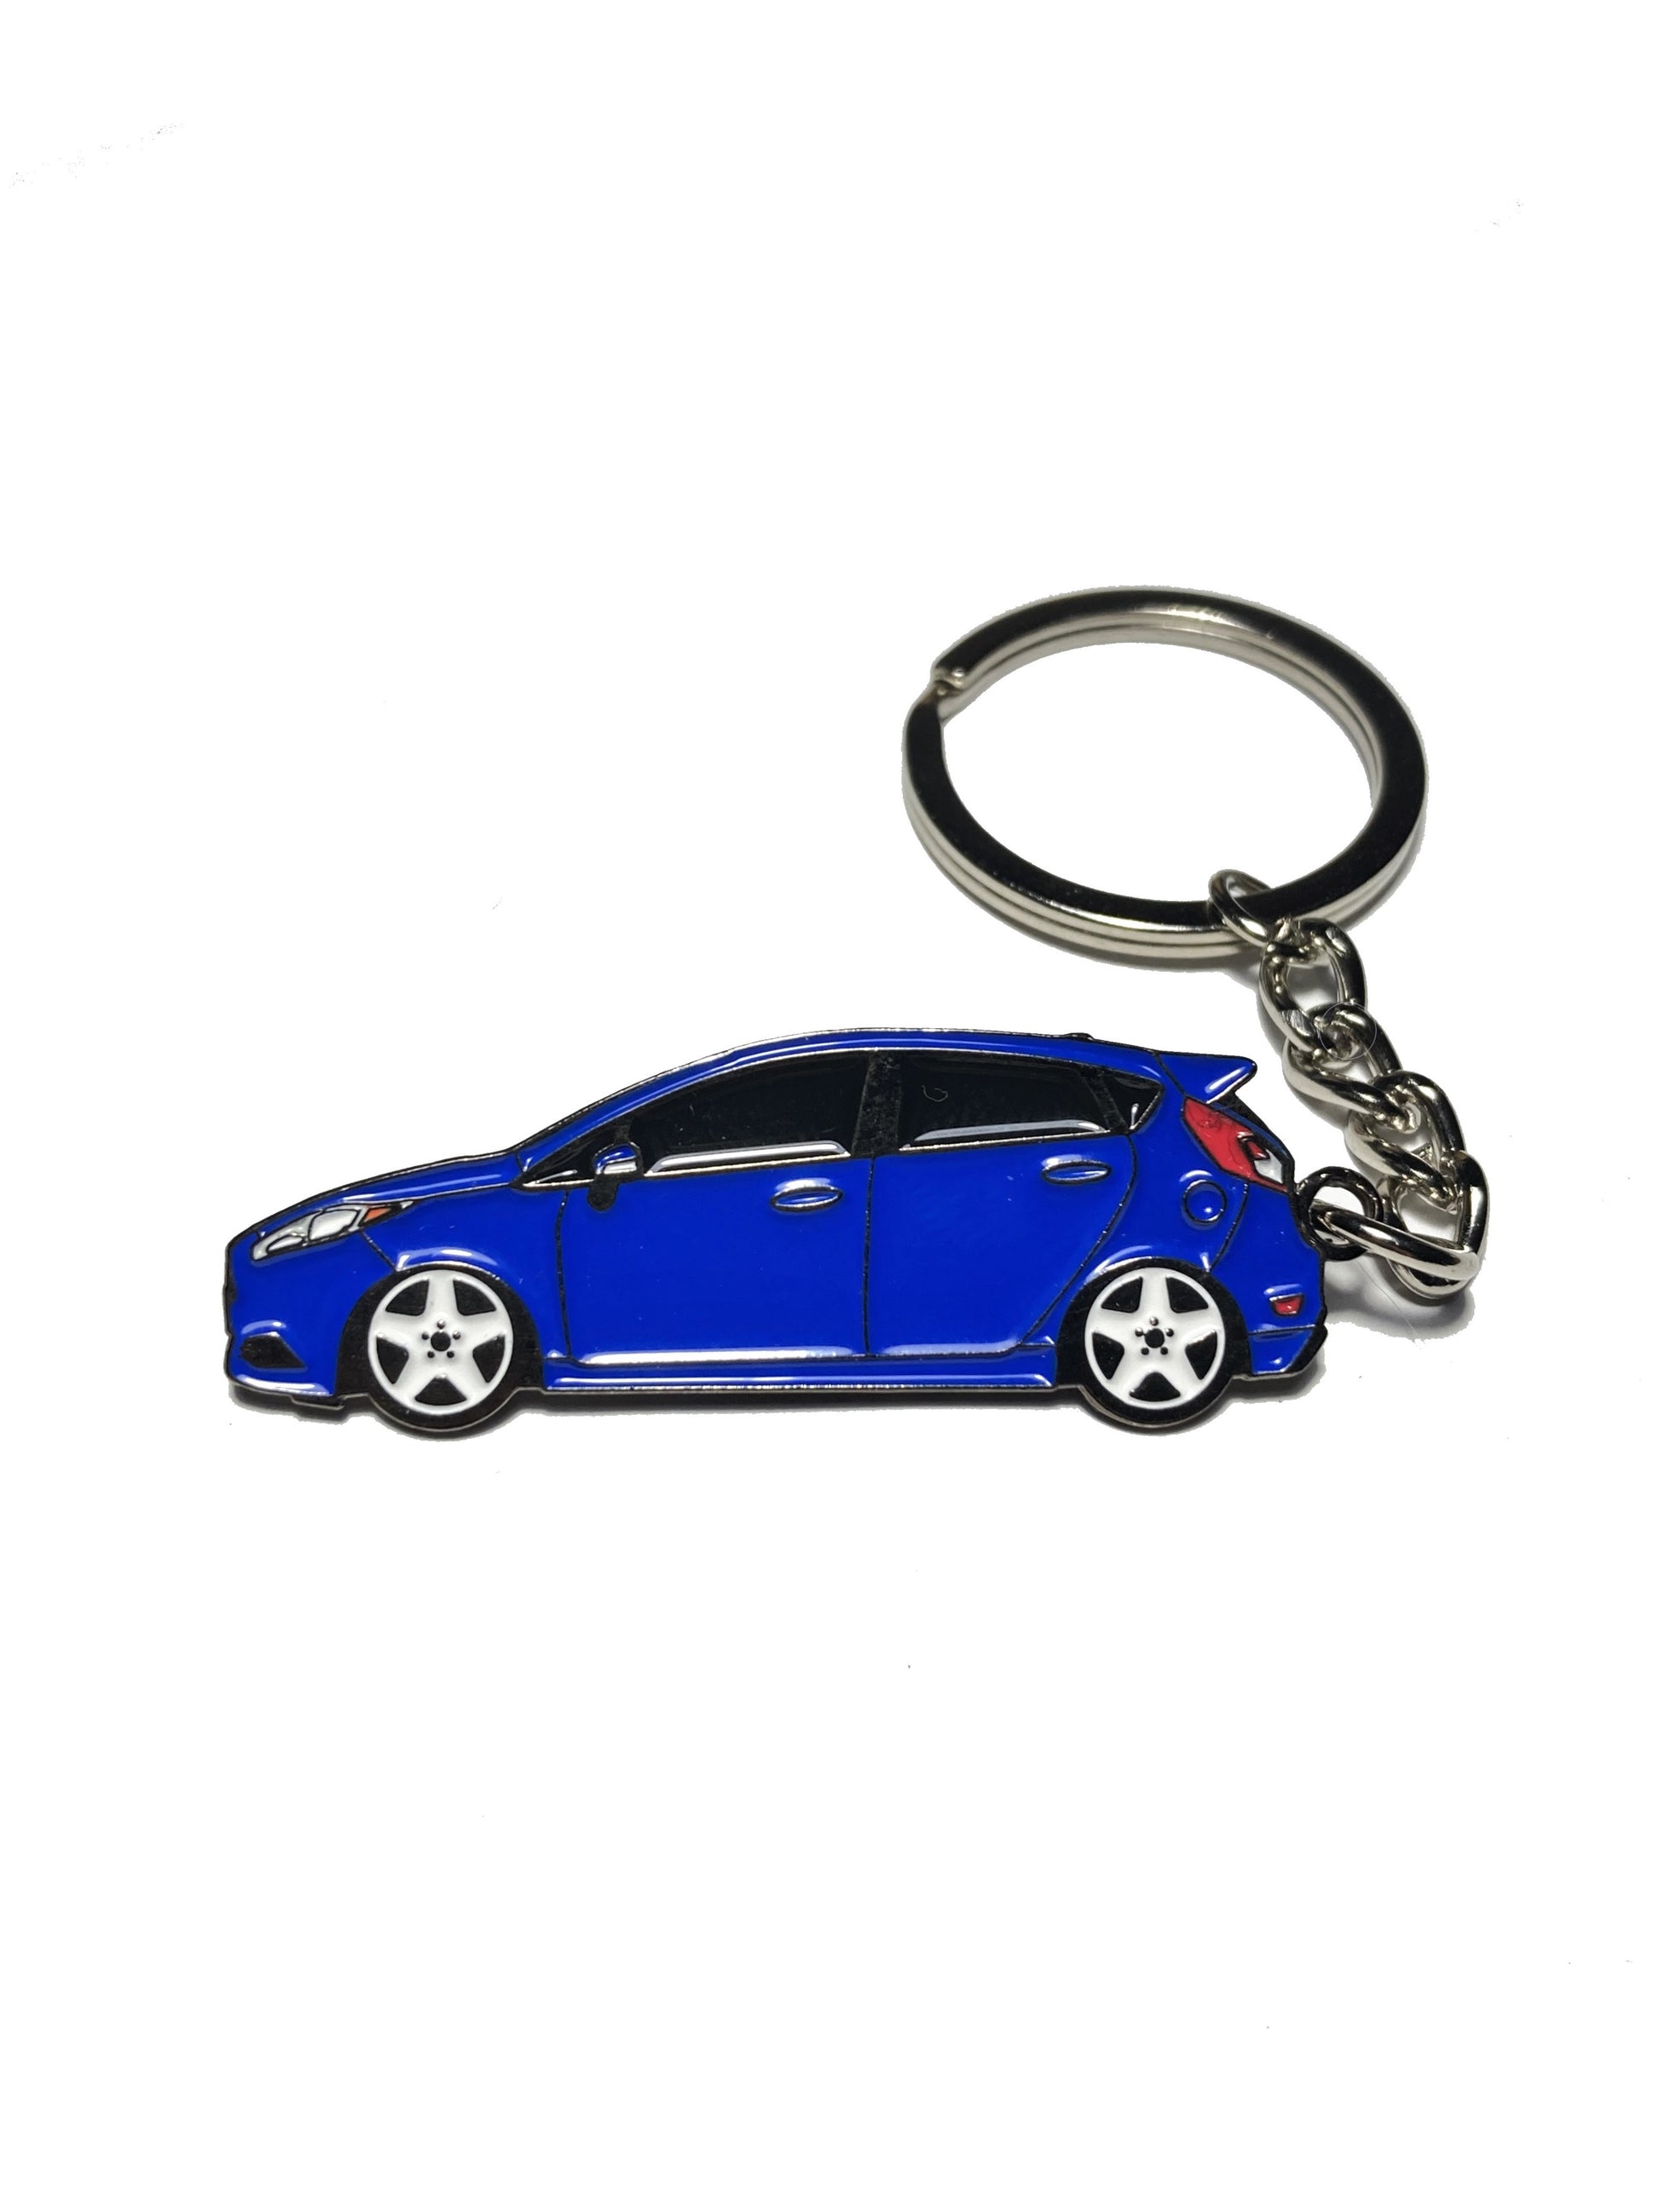 Drift Pins Fiesta St Keychains Kona Blue